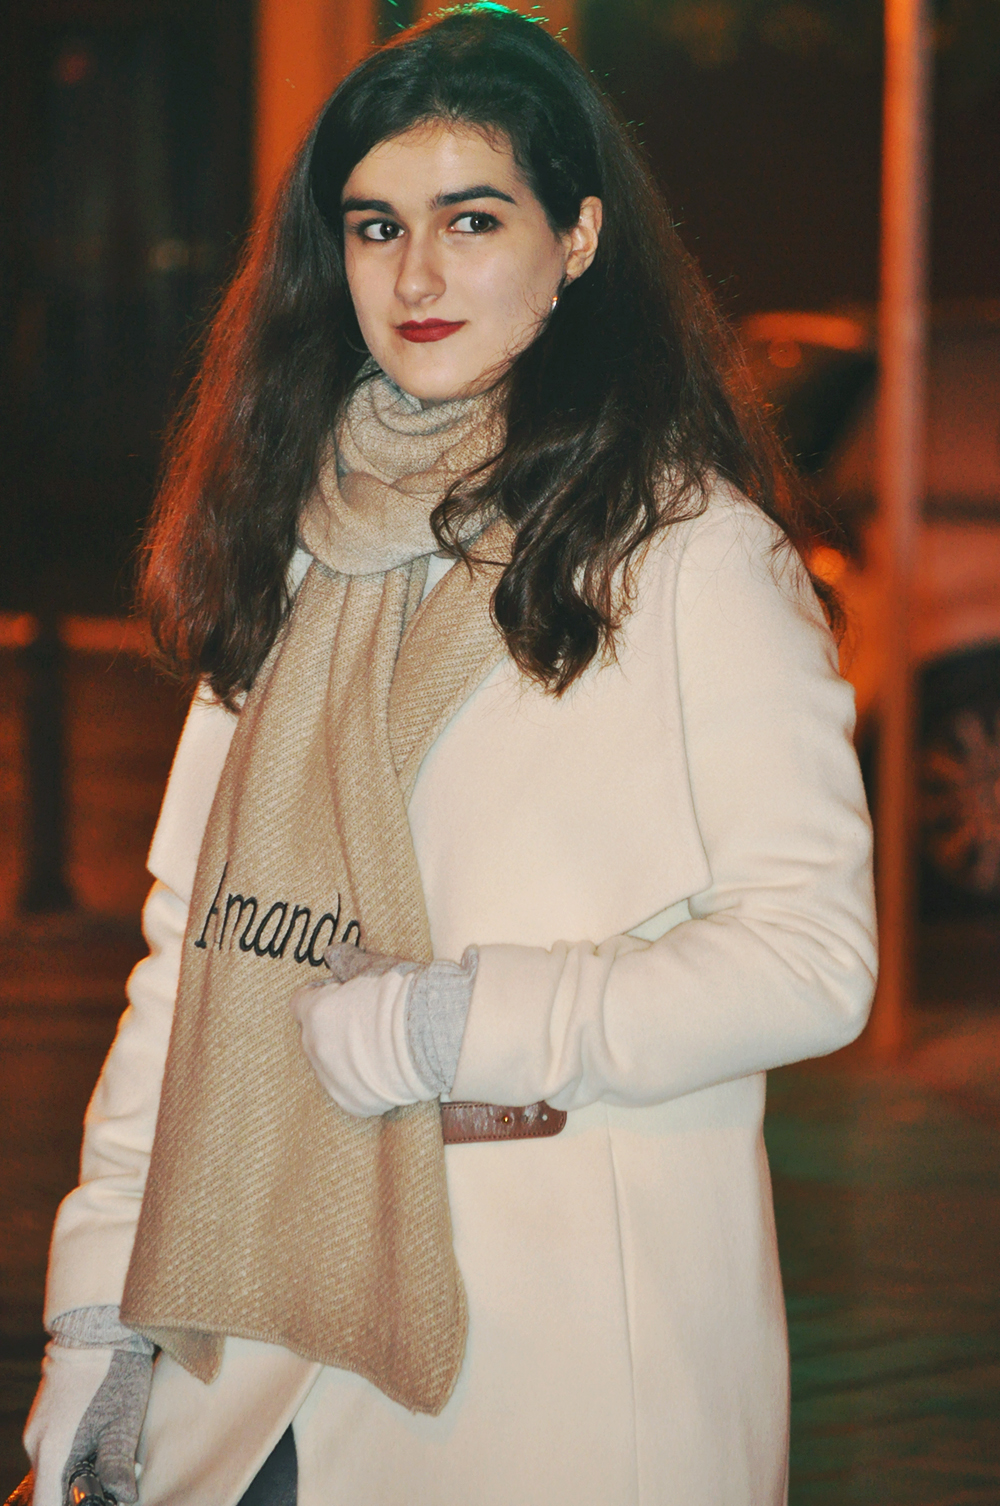 something fashion burberry wrap coat initials personalized scarf cara delevigne spain valencia style blog